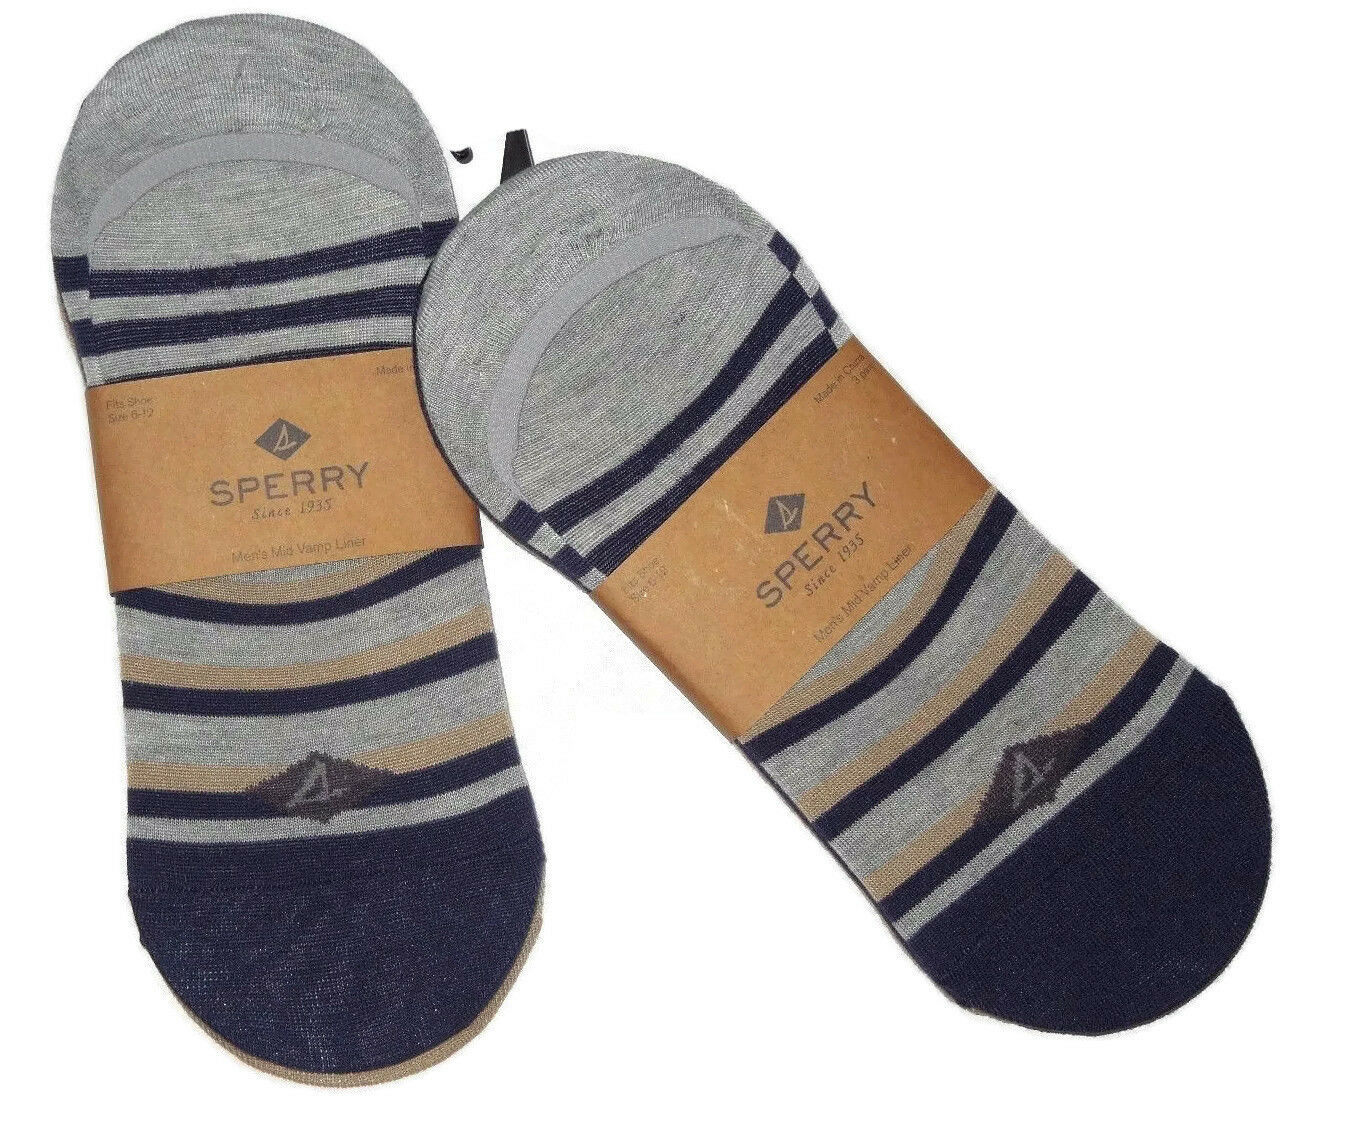 SperryTop Sider men's 6 pair liner Socks 6-12 Navy tan grey striped & solid - $37.17